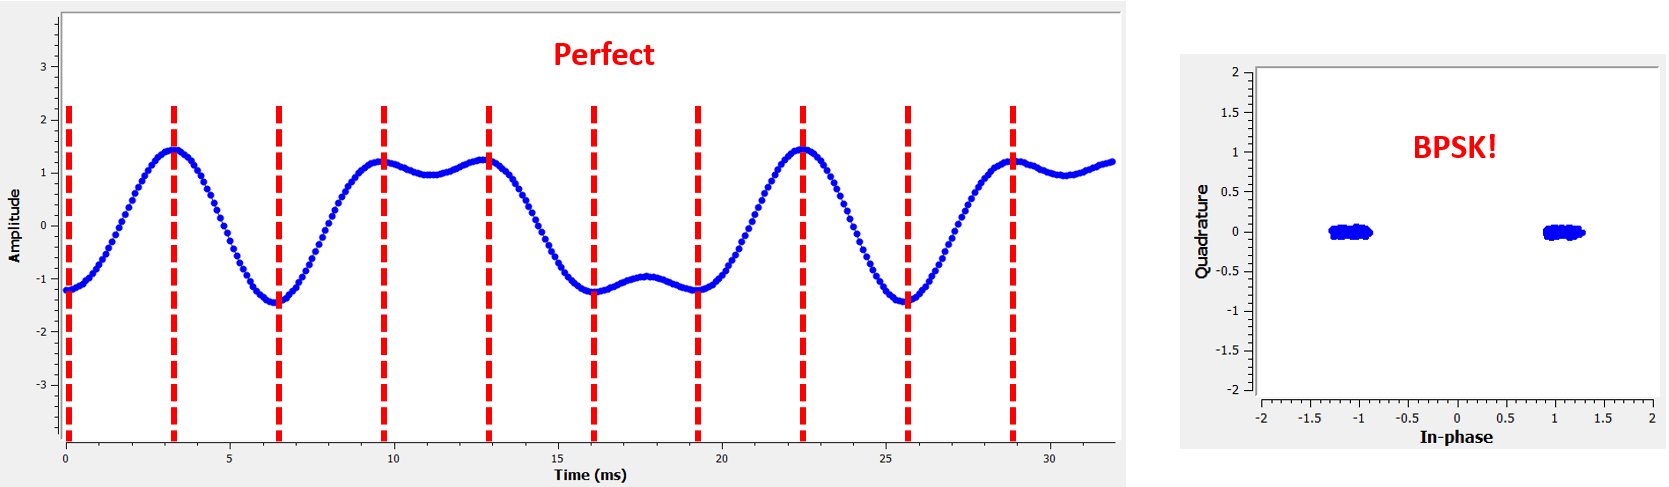 GNU Radio simulation showing perfect sampling as far as timing